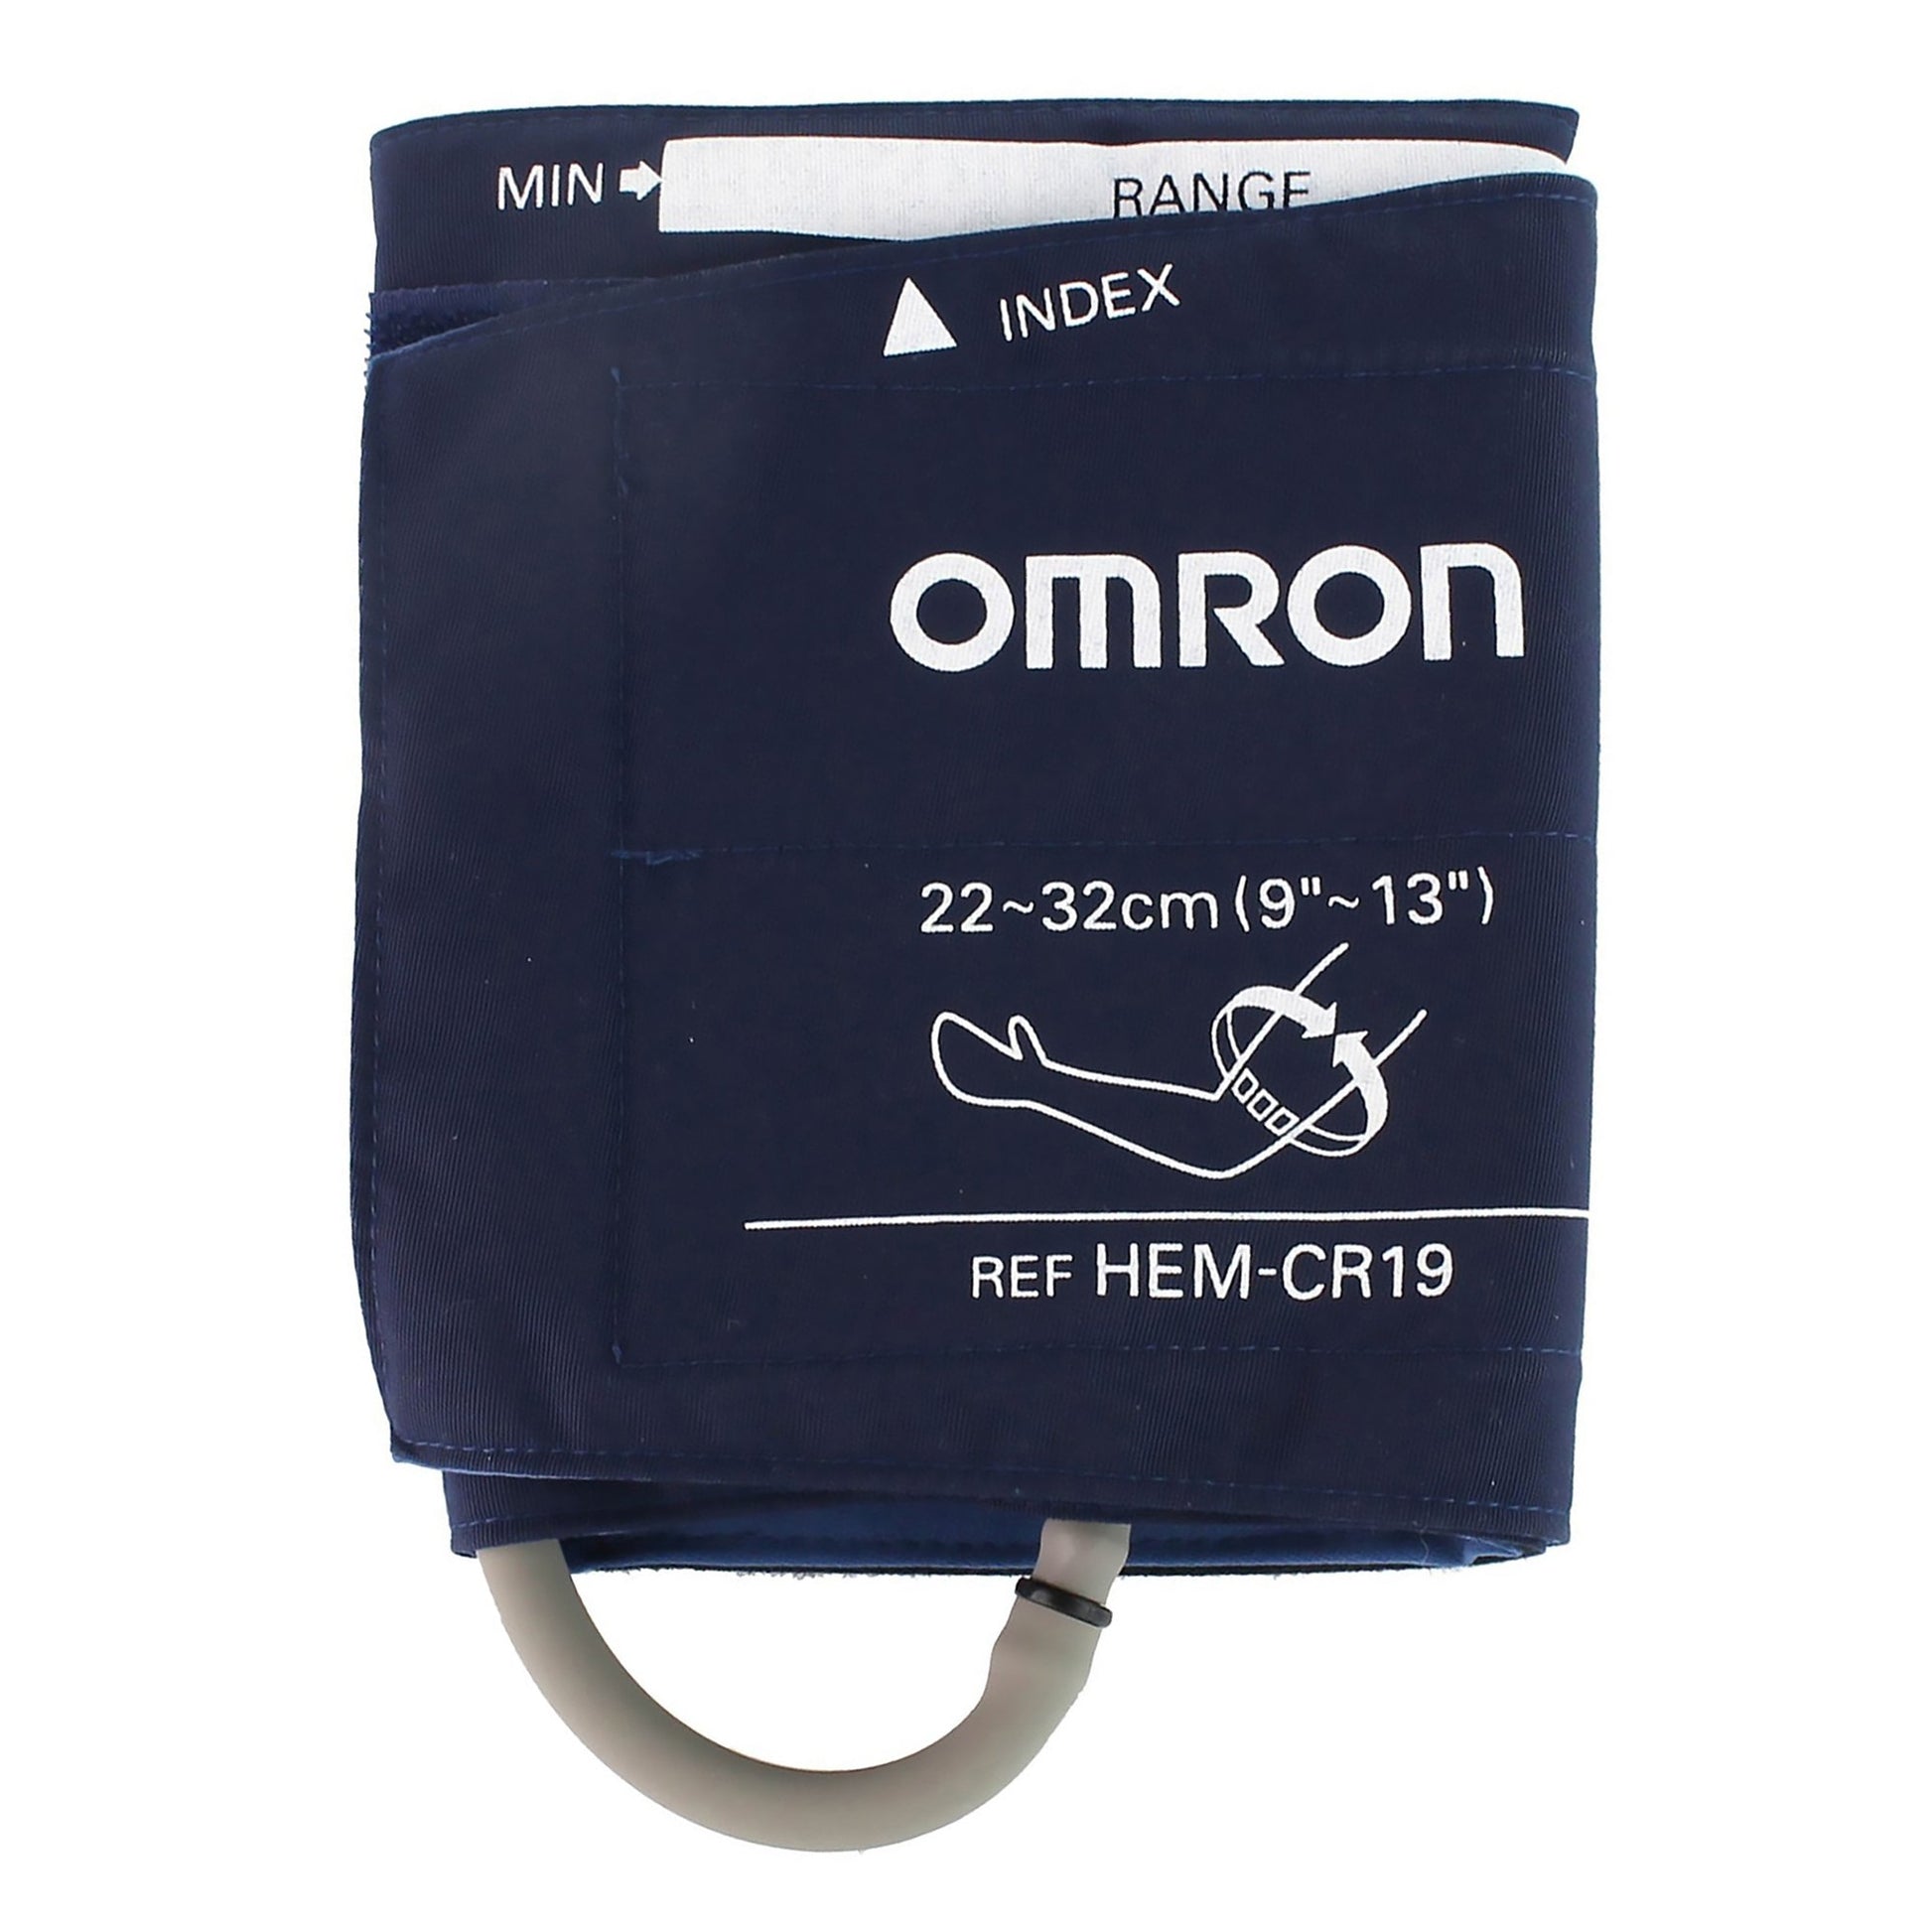 Omron 5 Series Blood Pressure Monitor Kit with IntelliSense